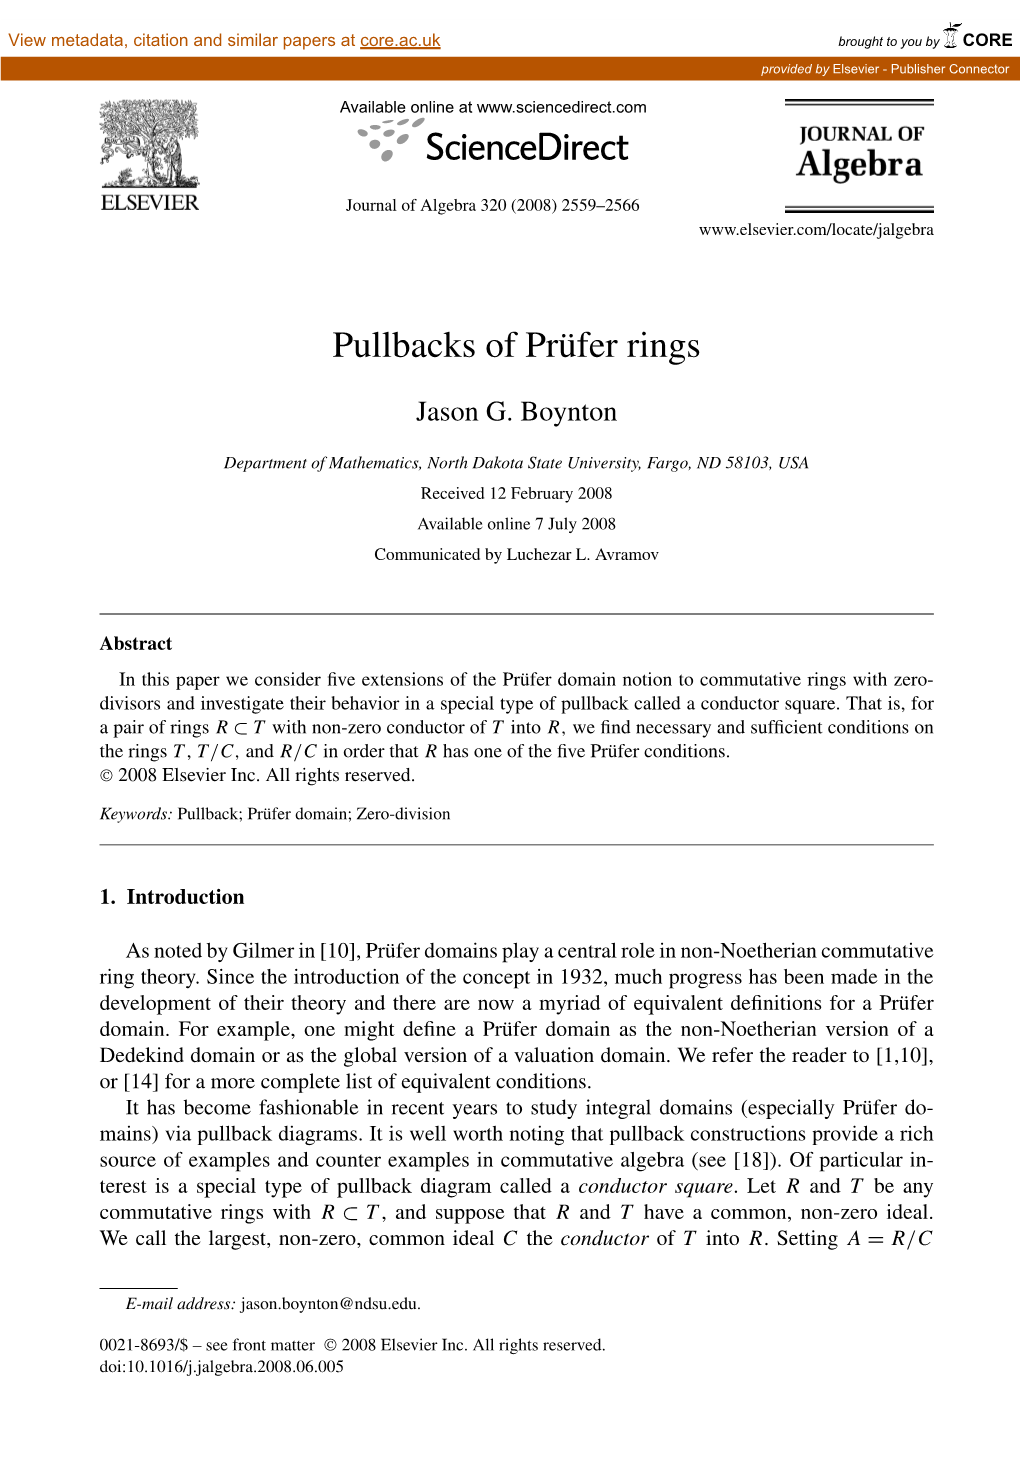 Pullbacks of Prüfer Rings